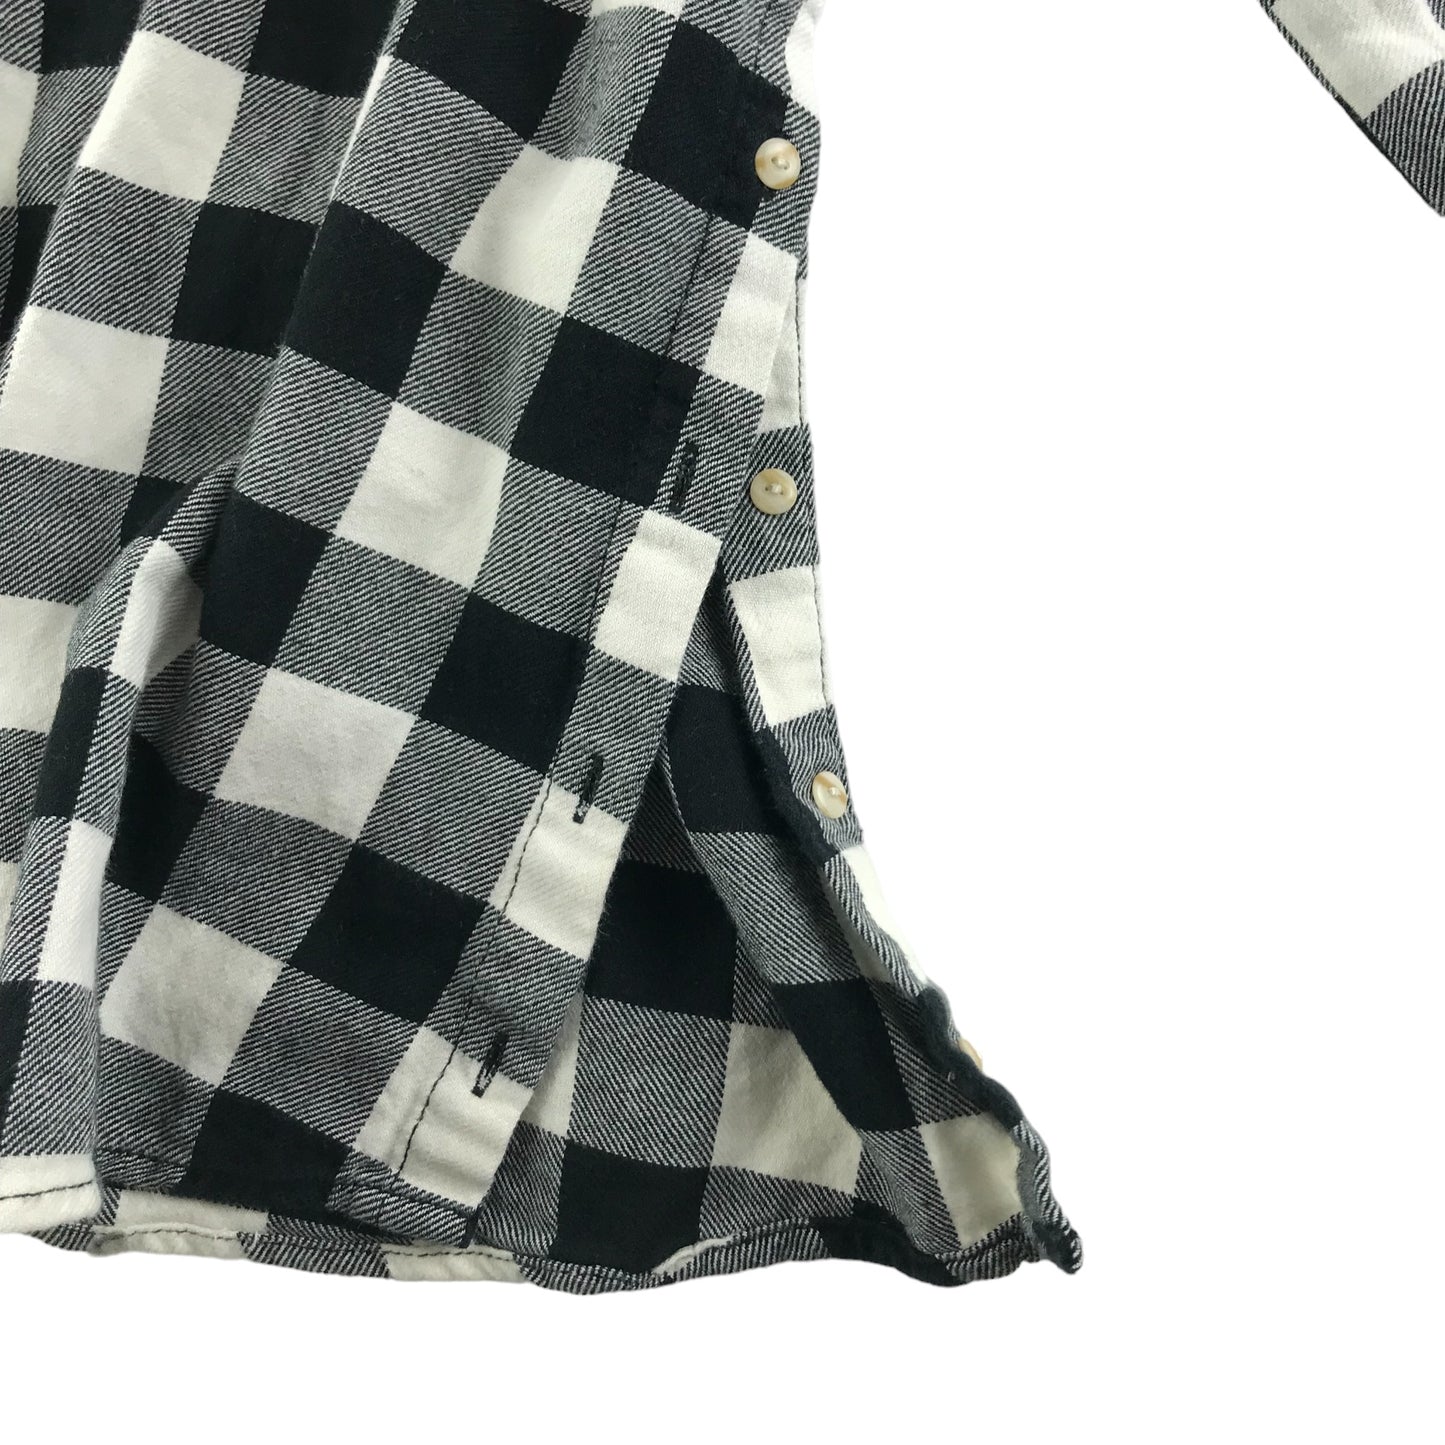 Zara Shirt Age 9 Black and White Check Pattern Button Up Cotton